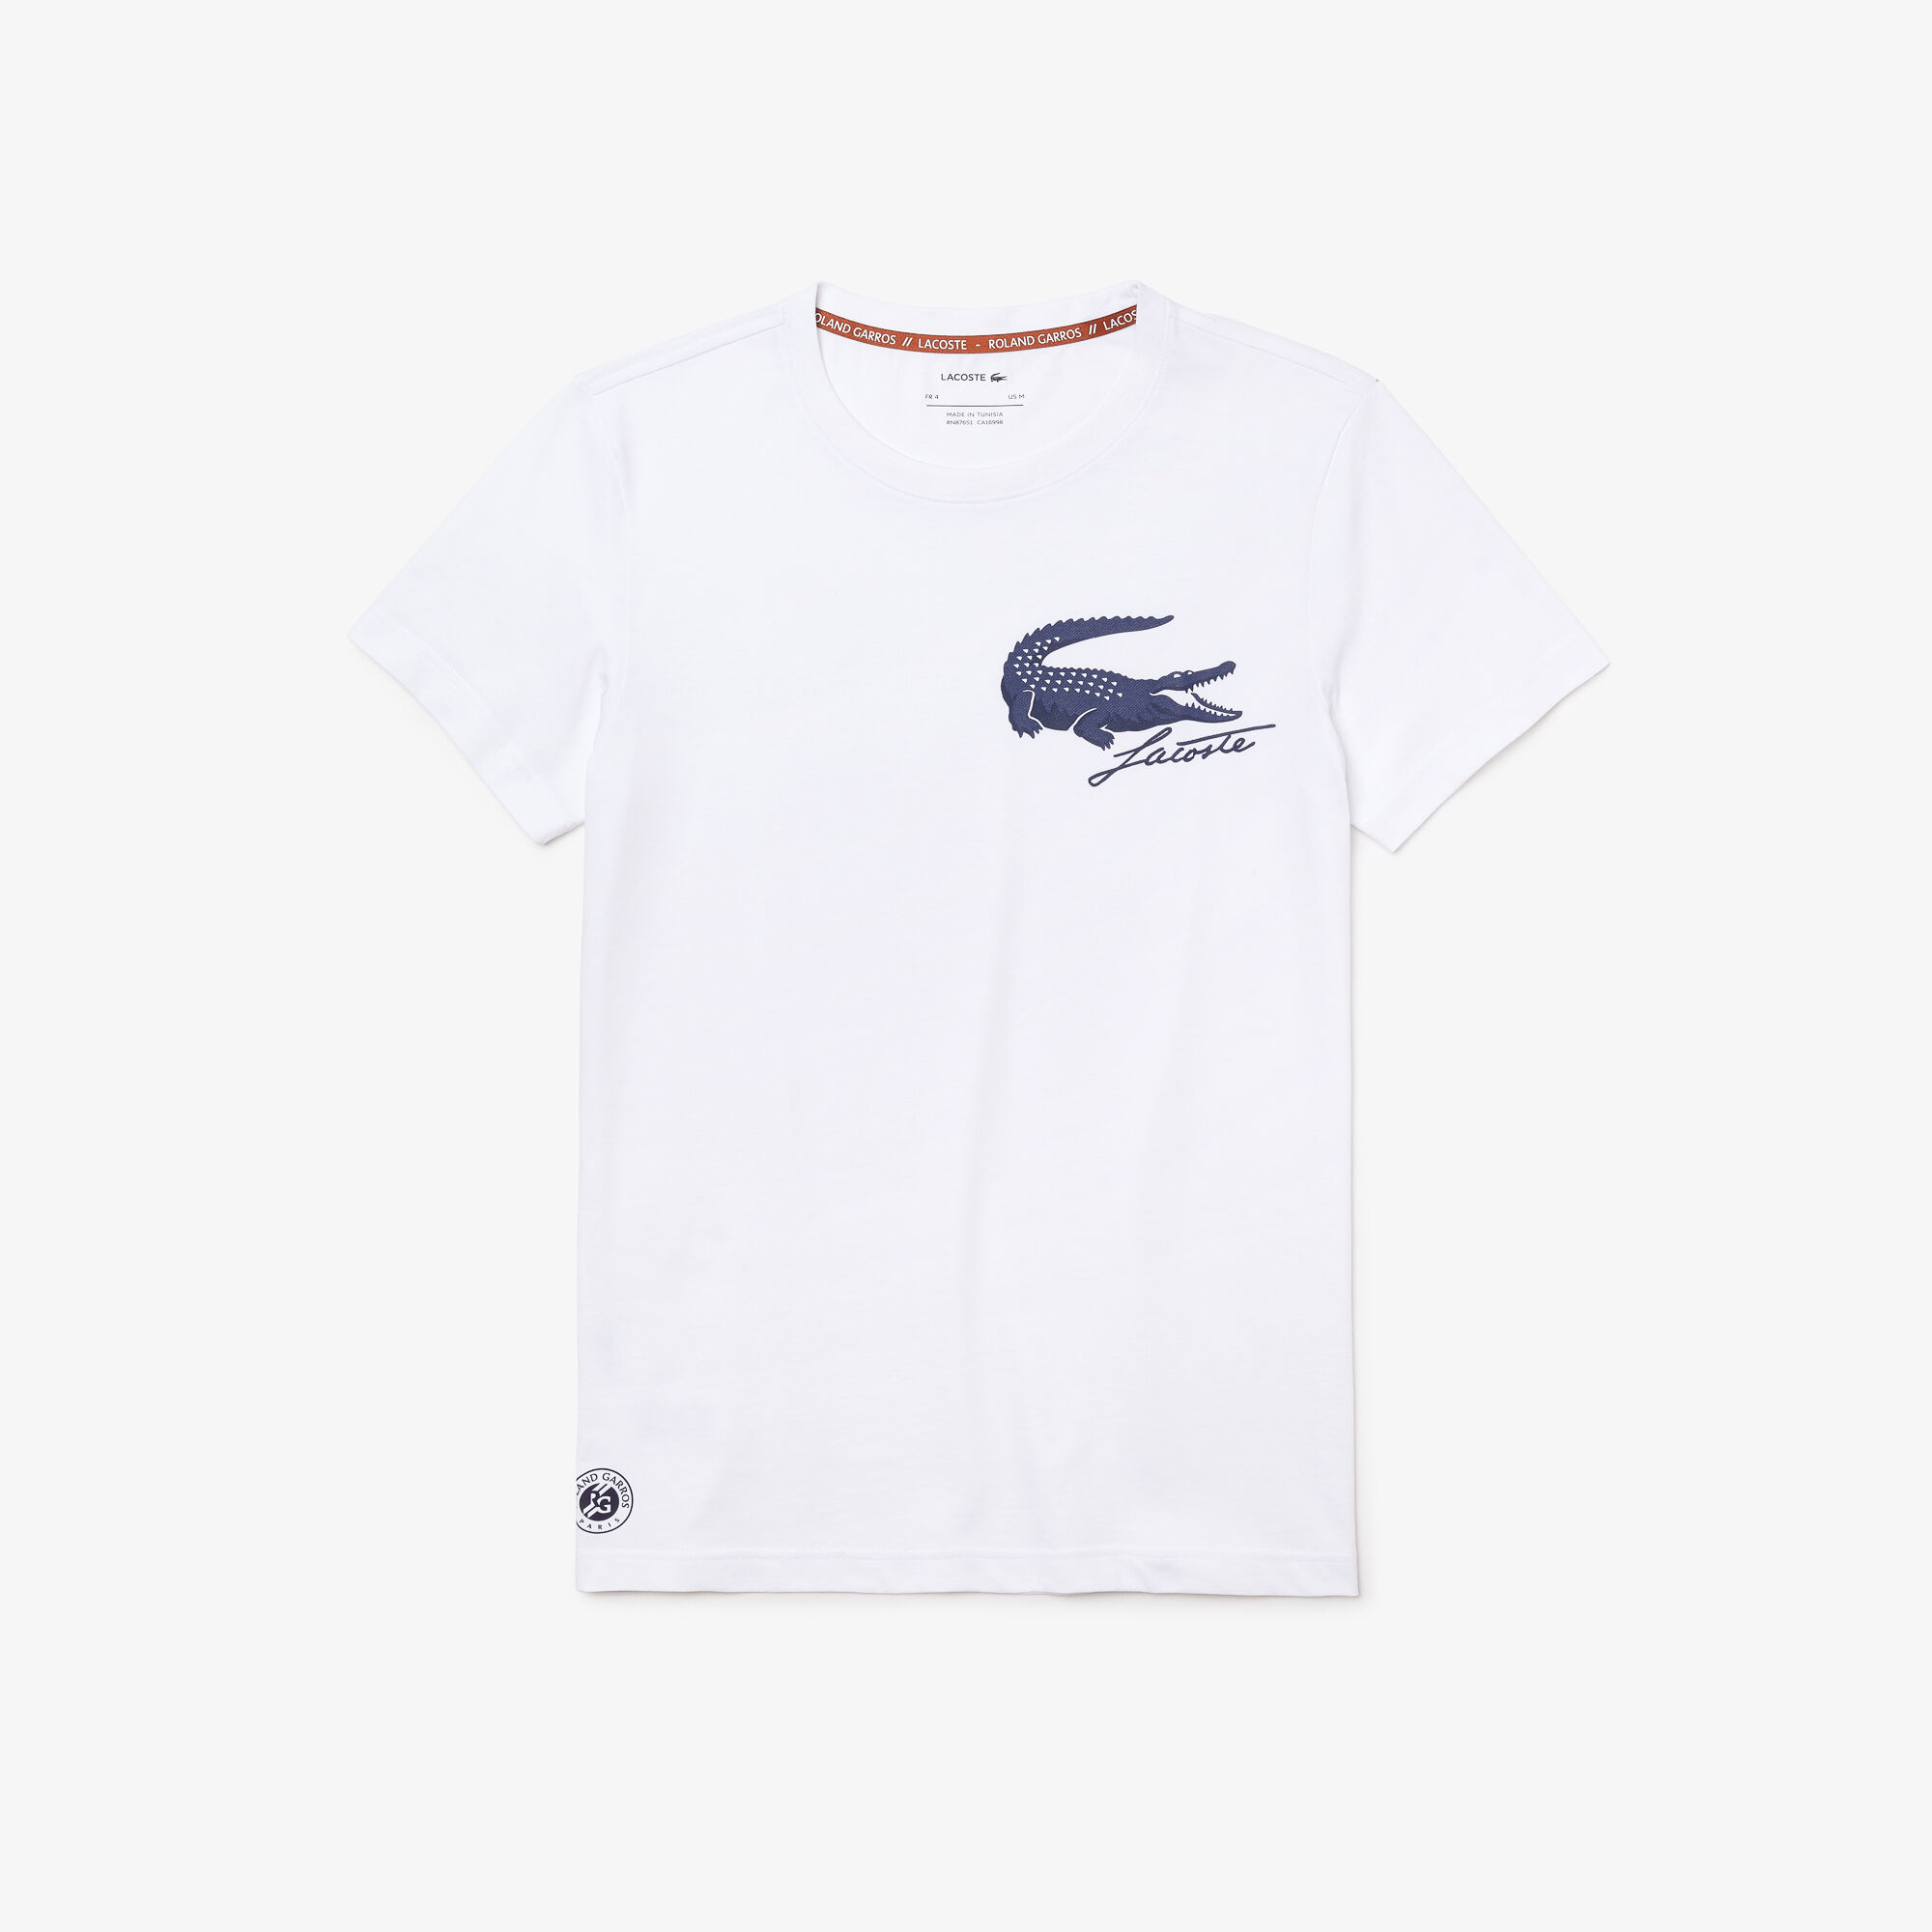 Men’s Lacoste SPORT French Open Edition Crocodile Print T-shirt